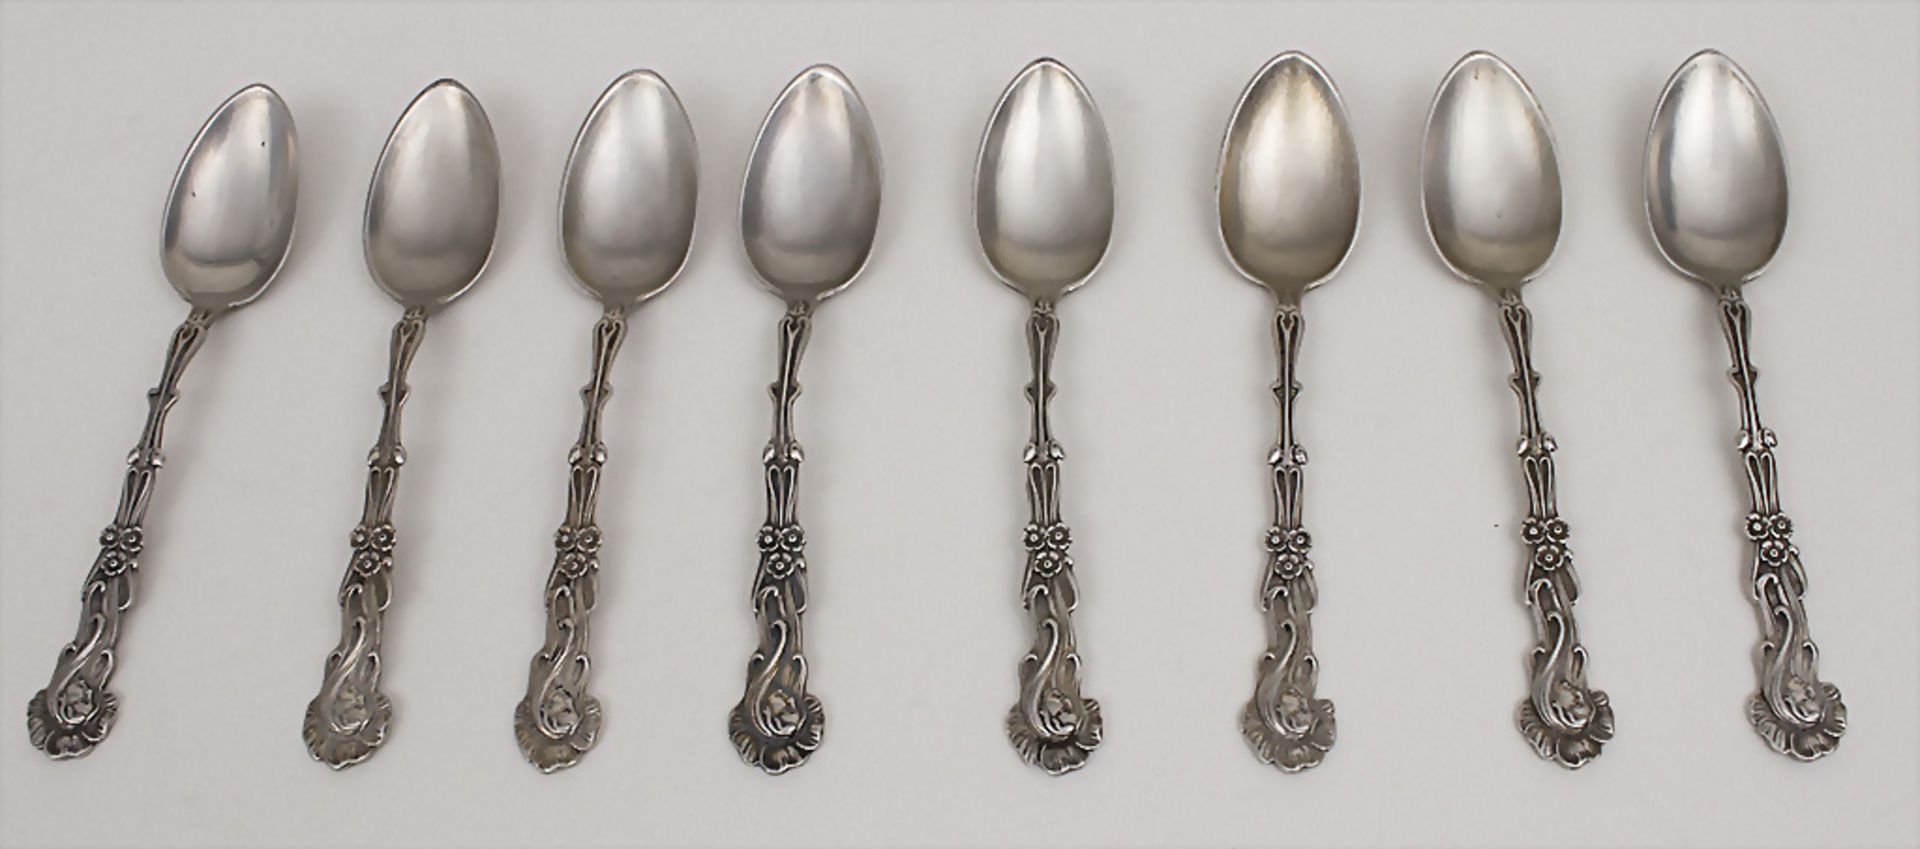 8 Jugendstil Kaffeelöffel / 8 Art Nouveau coffee spoons, deutsch, um 1900 - Image 2 of 3